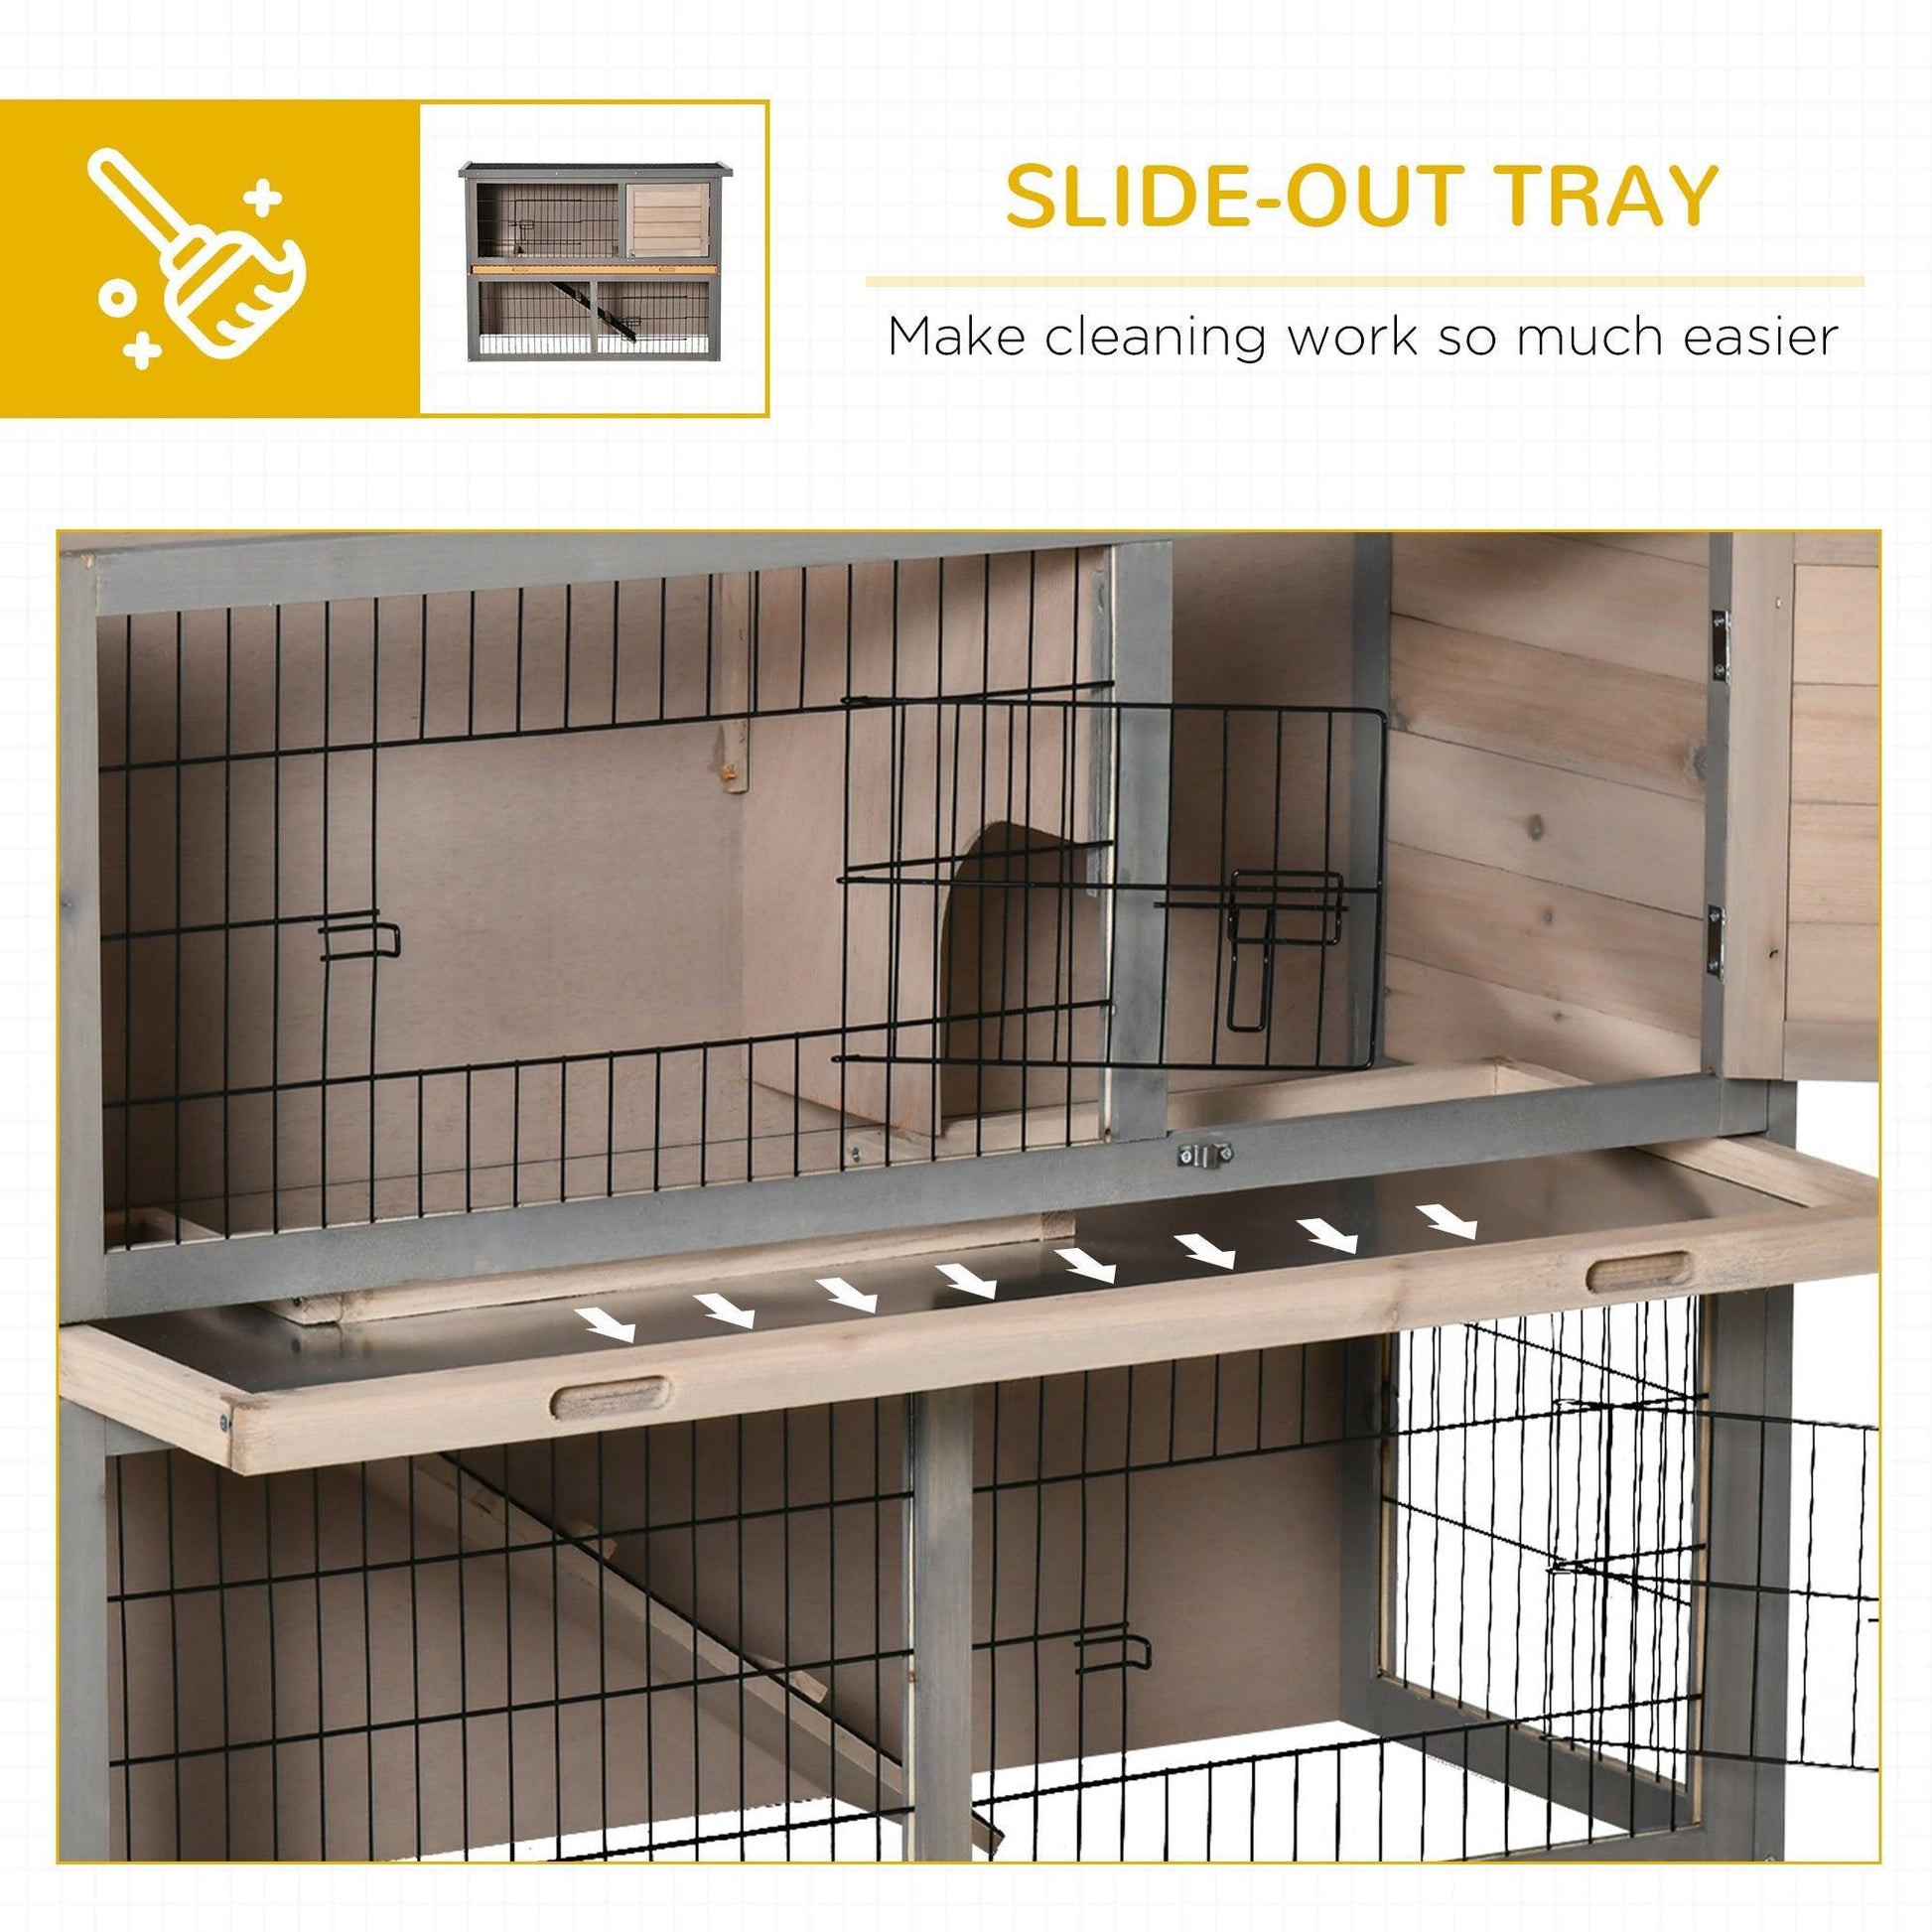 PawHut Rabbit Hutch: Indoor Outdoor Small Animal Cage - ALL4U RETAILER LTD